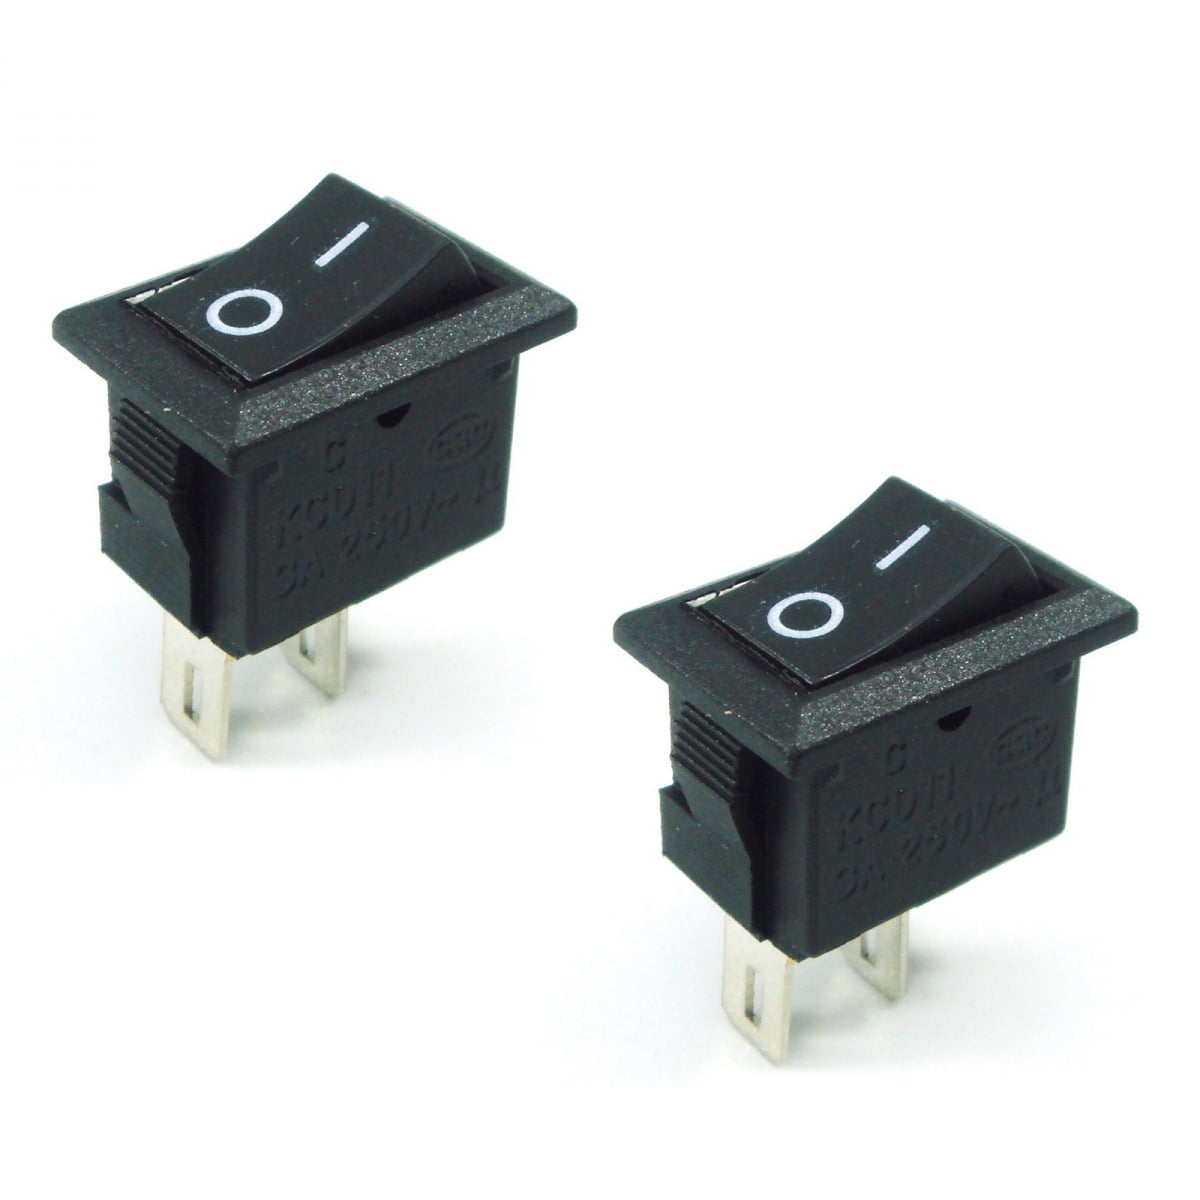 5 X Small Mini Black On/Off Rocker Switch Rectangle SPST 12V BEST PRICE 